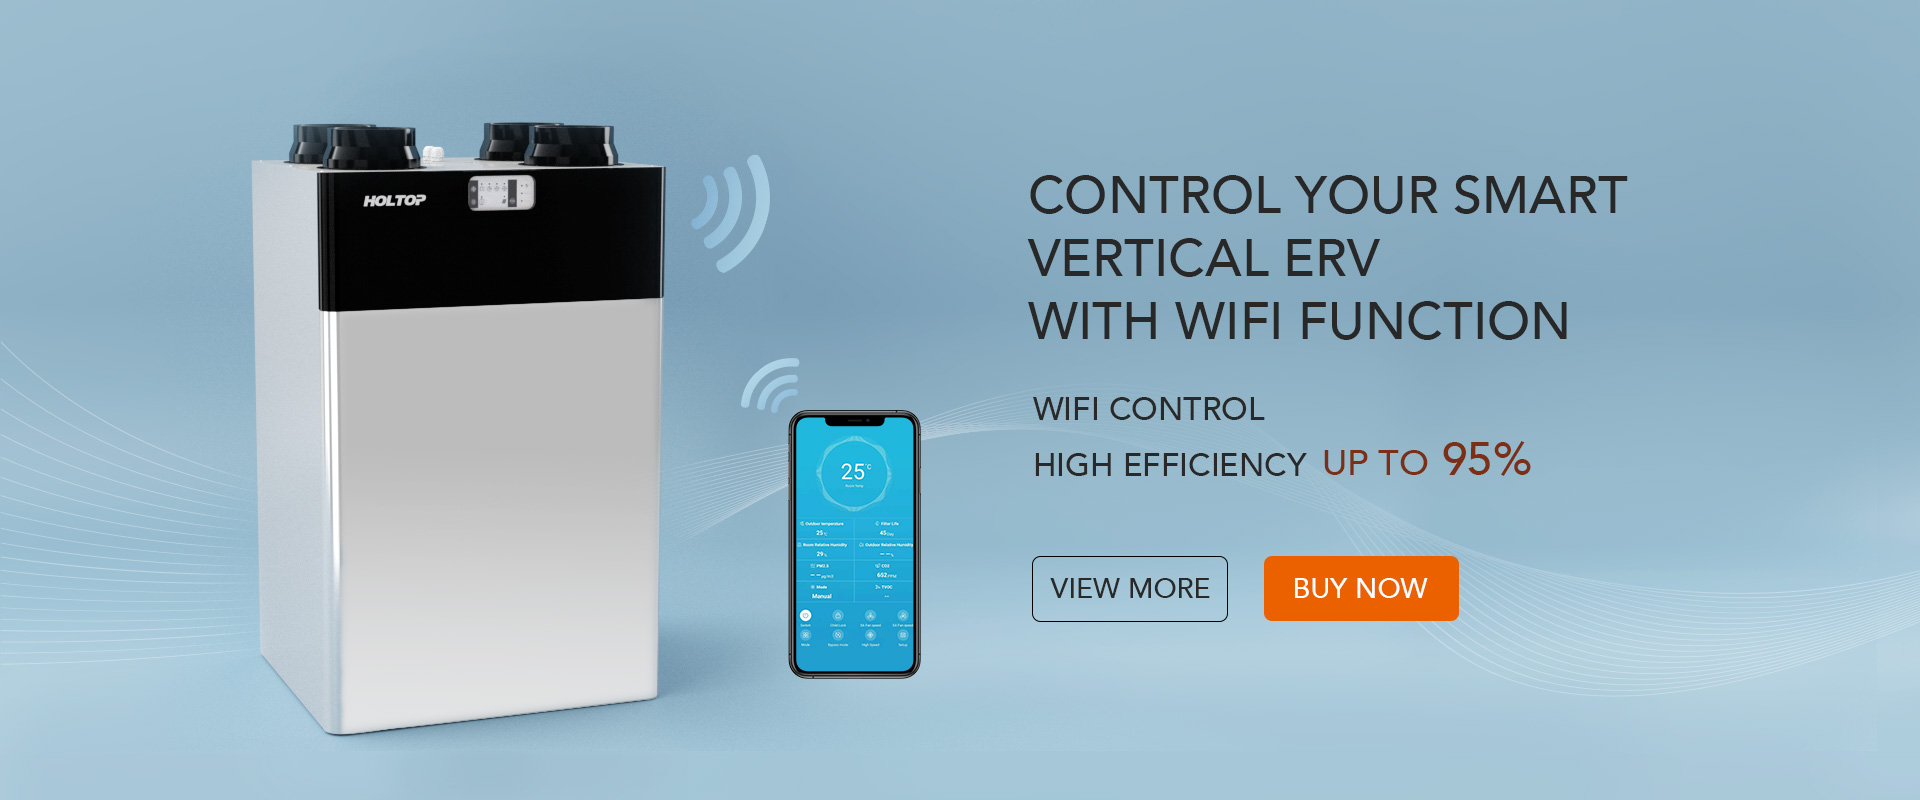 Holtop Upgraded Smart Vertical HRV met WiFi-functie